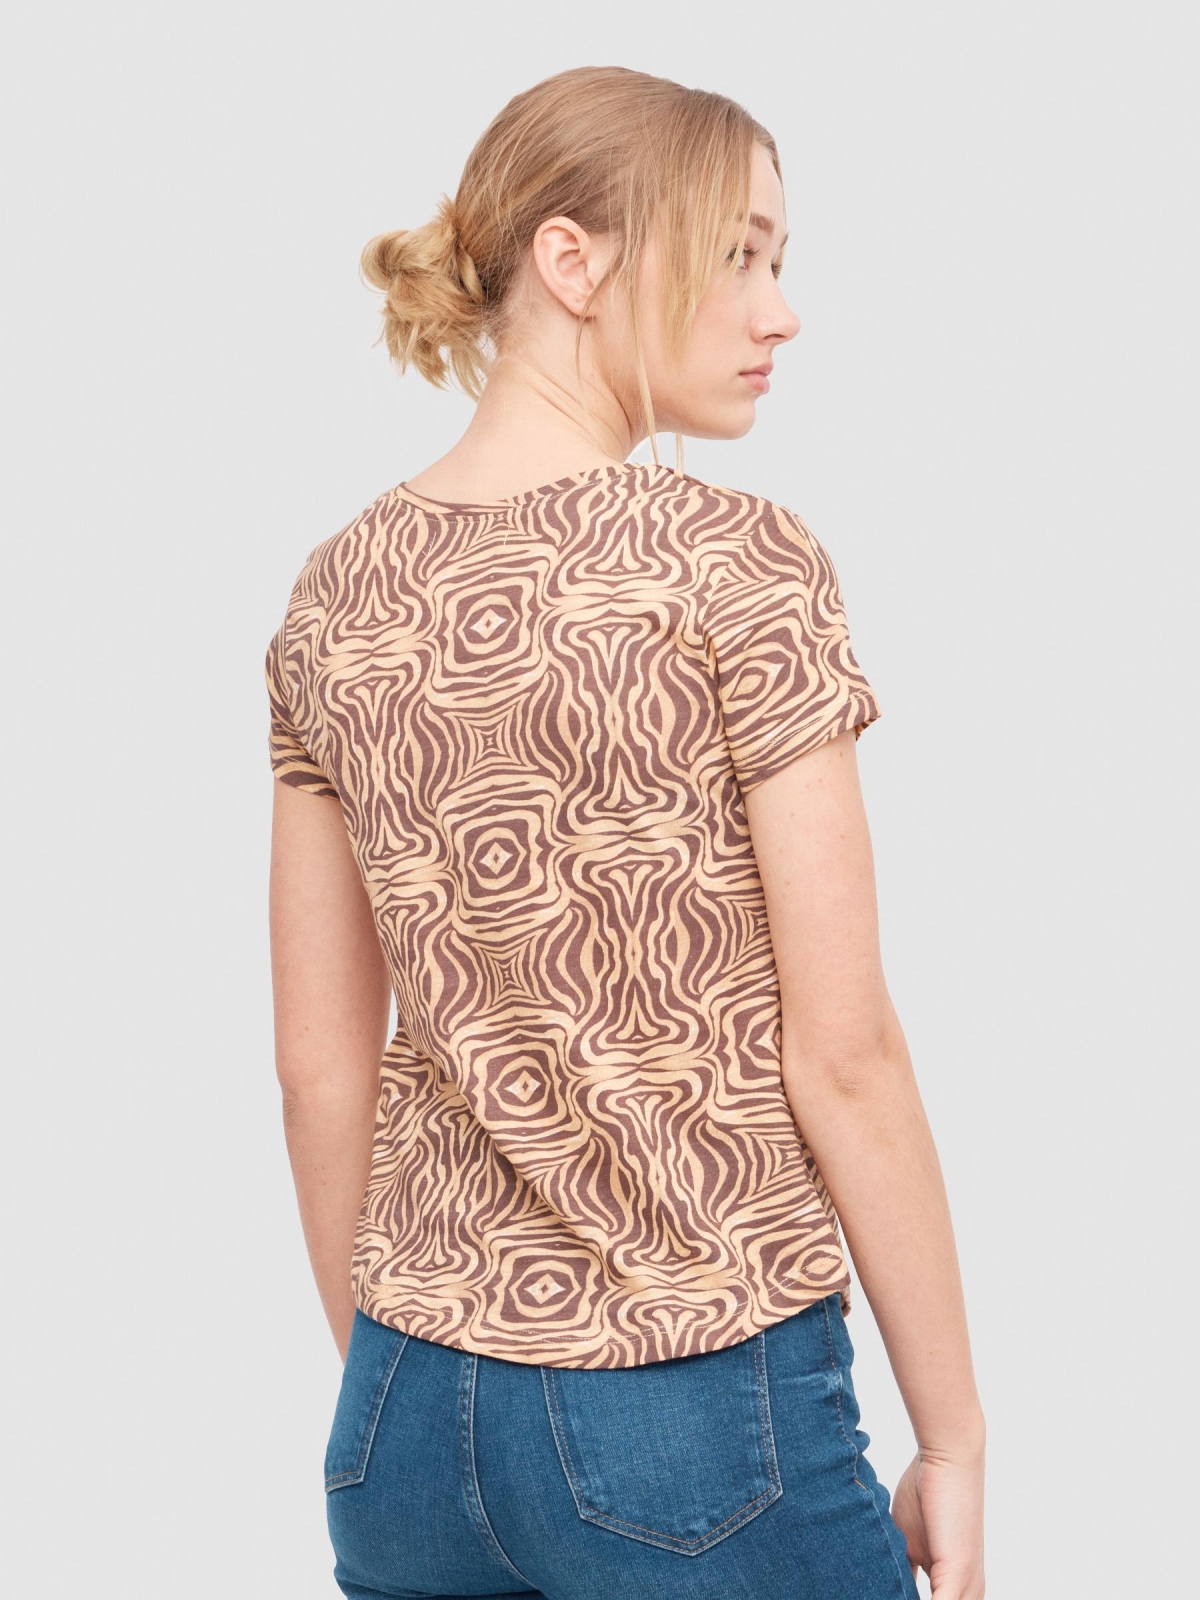 Camiseta animal print psicodélico marrón vista media trasera